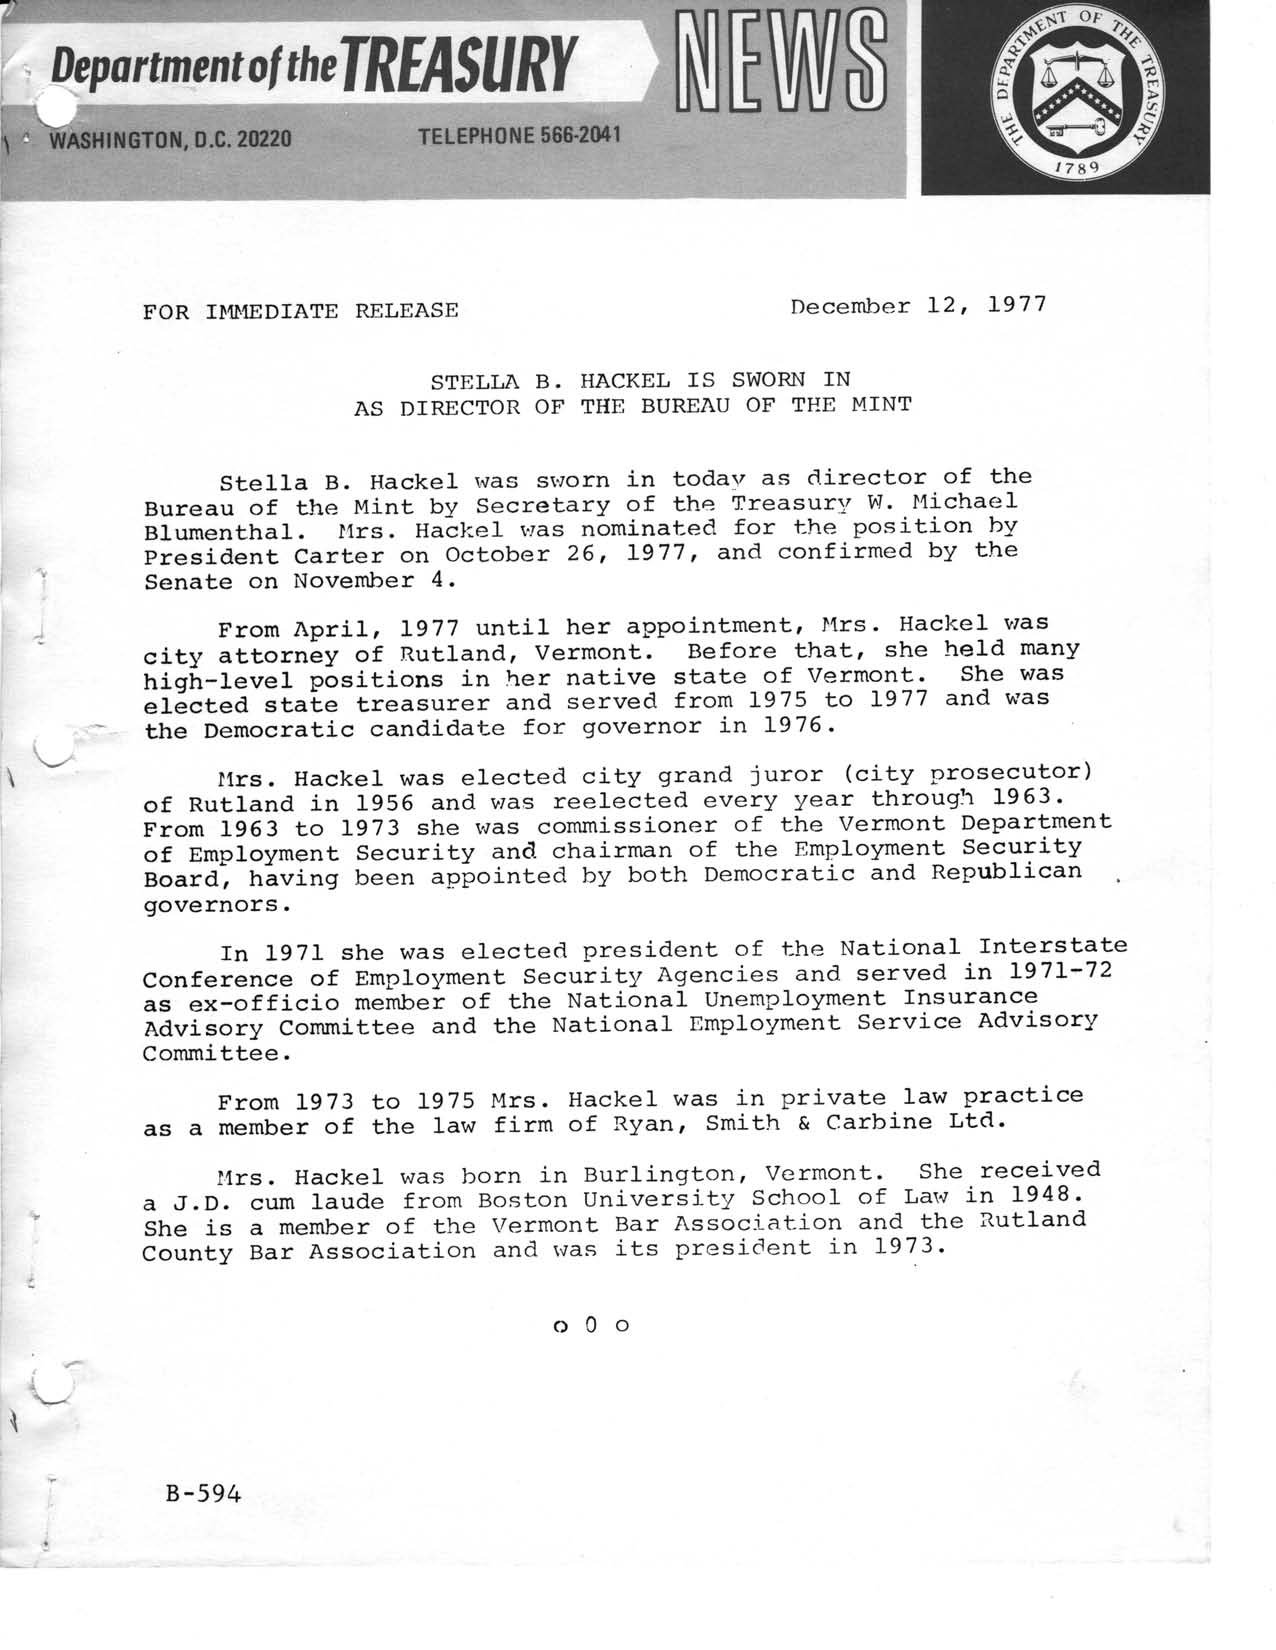 Historic Press Release: Hackel Sworn In, Page 1